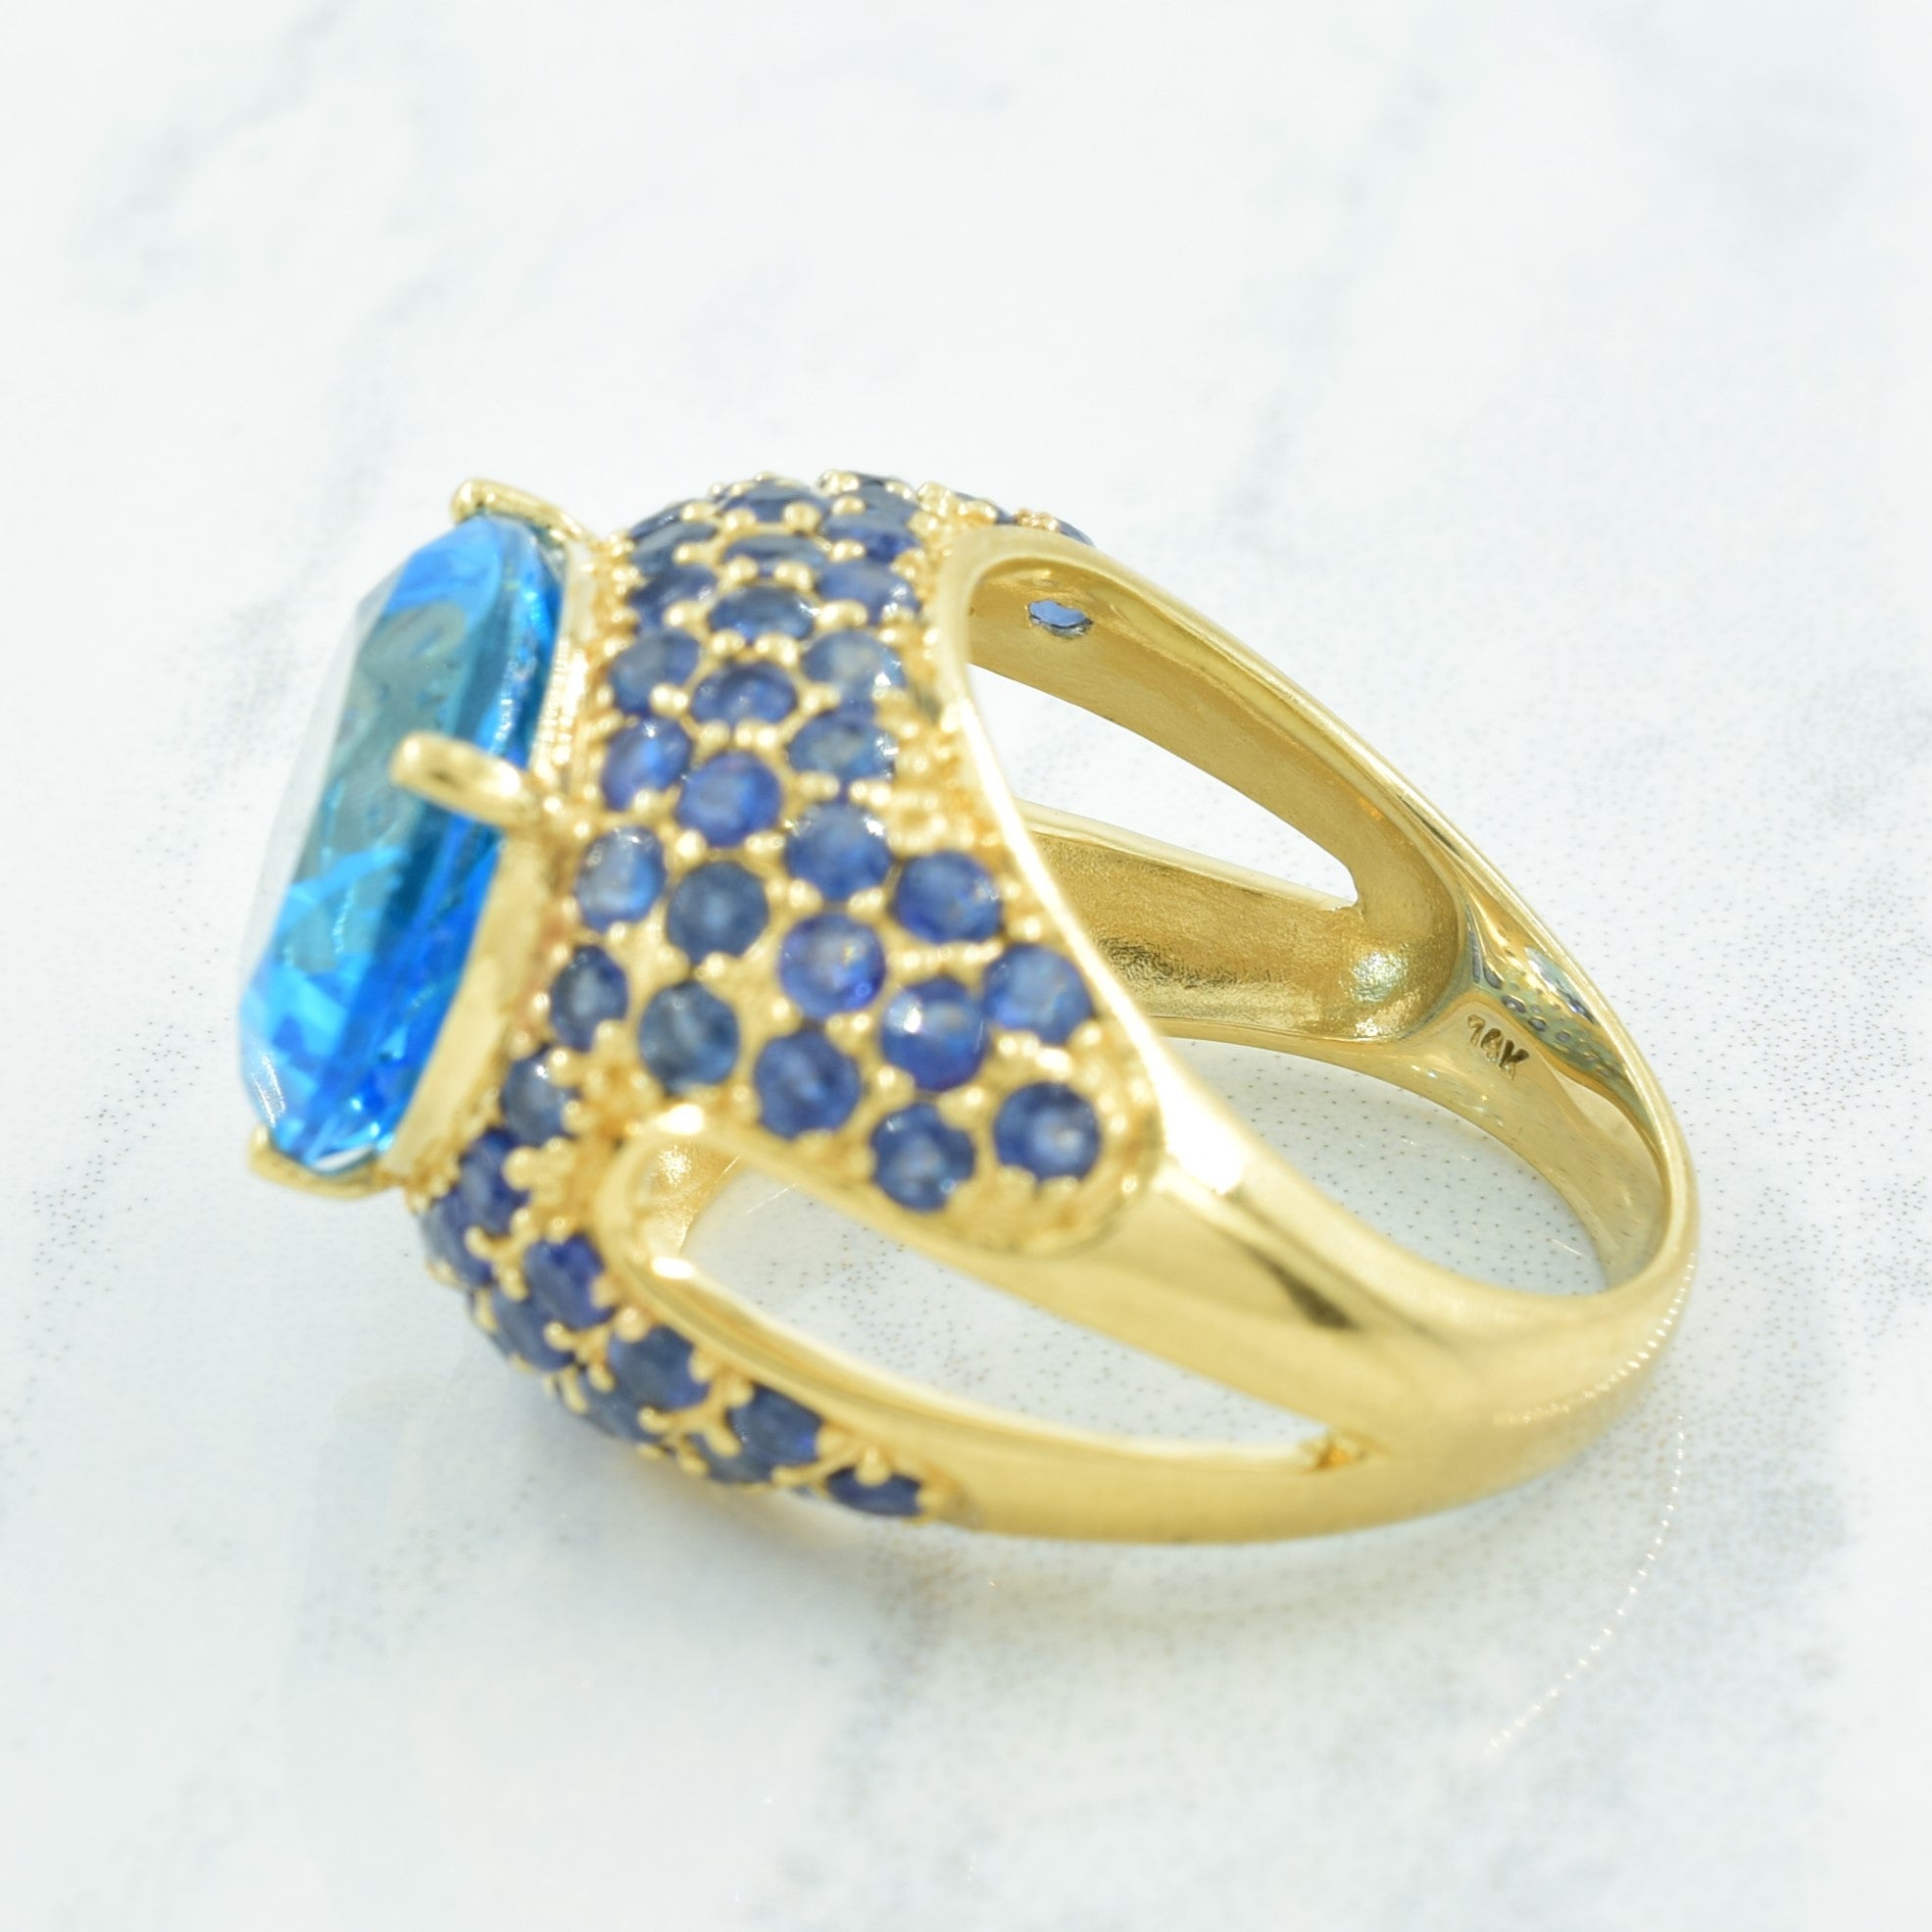 Blue Topaz & Sapphire Ring | 10.00ct, 3.00ctw | SZ 6.25 |